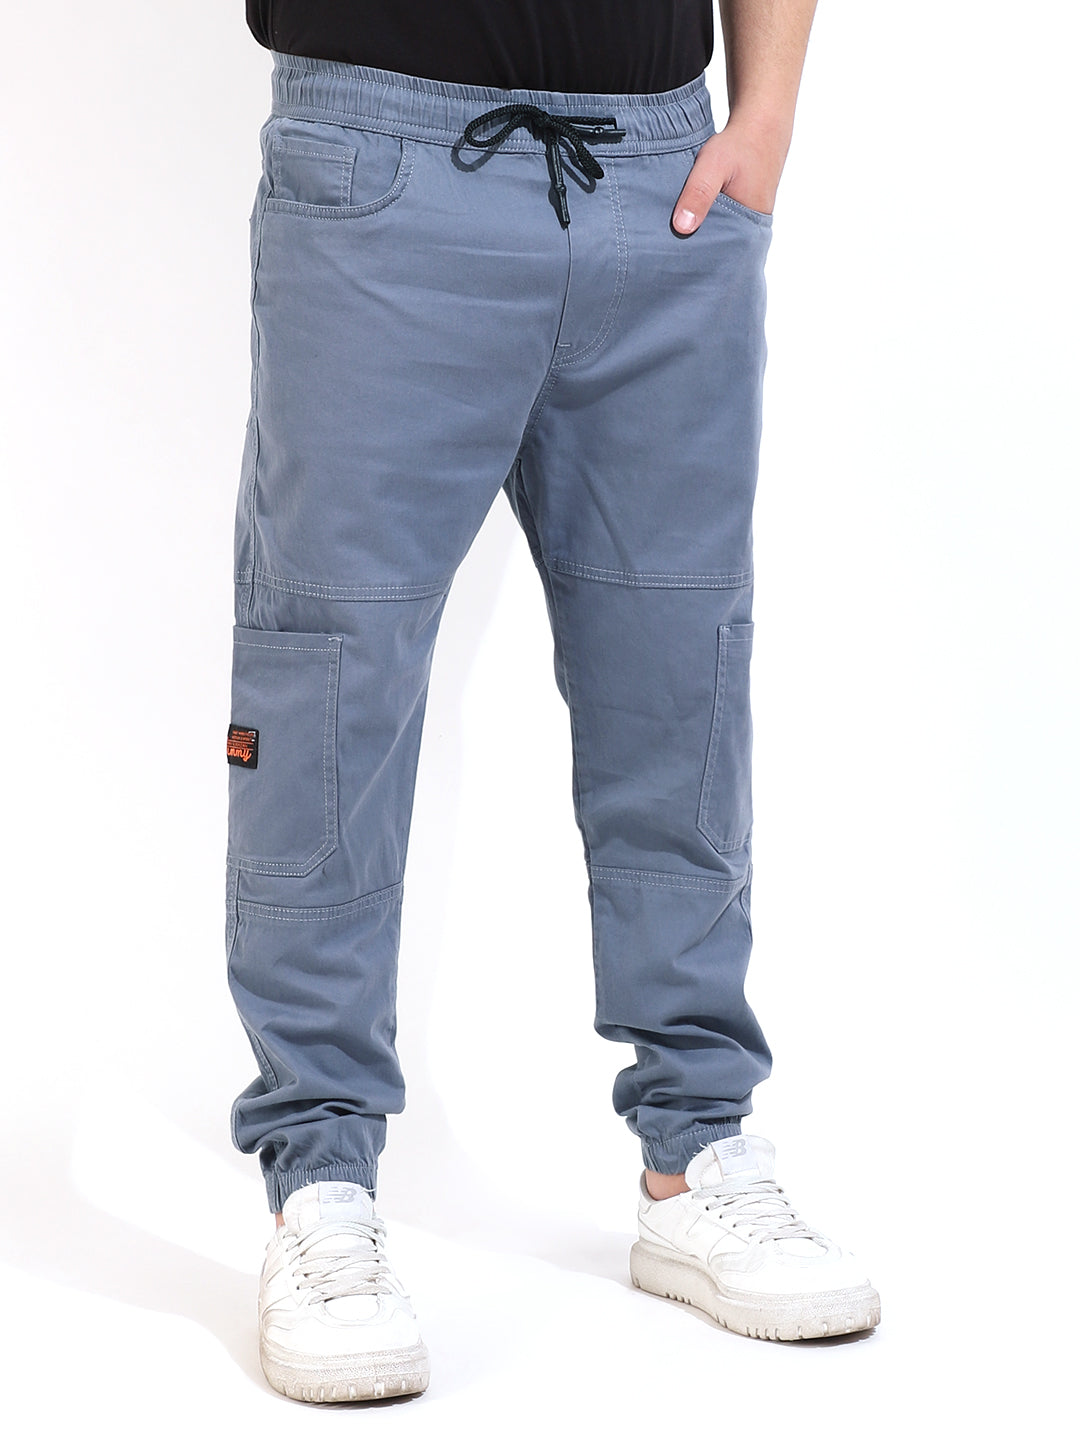 Mens Cargo Pant - Shop Cargo Style Jeans for Men